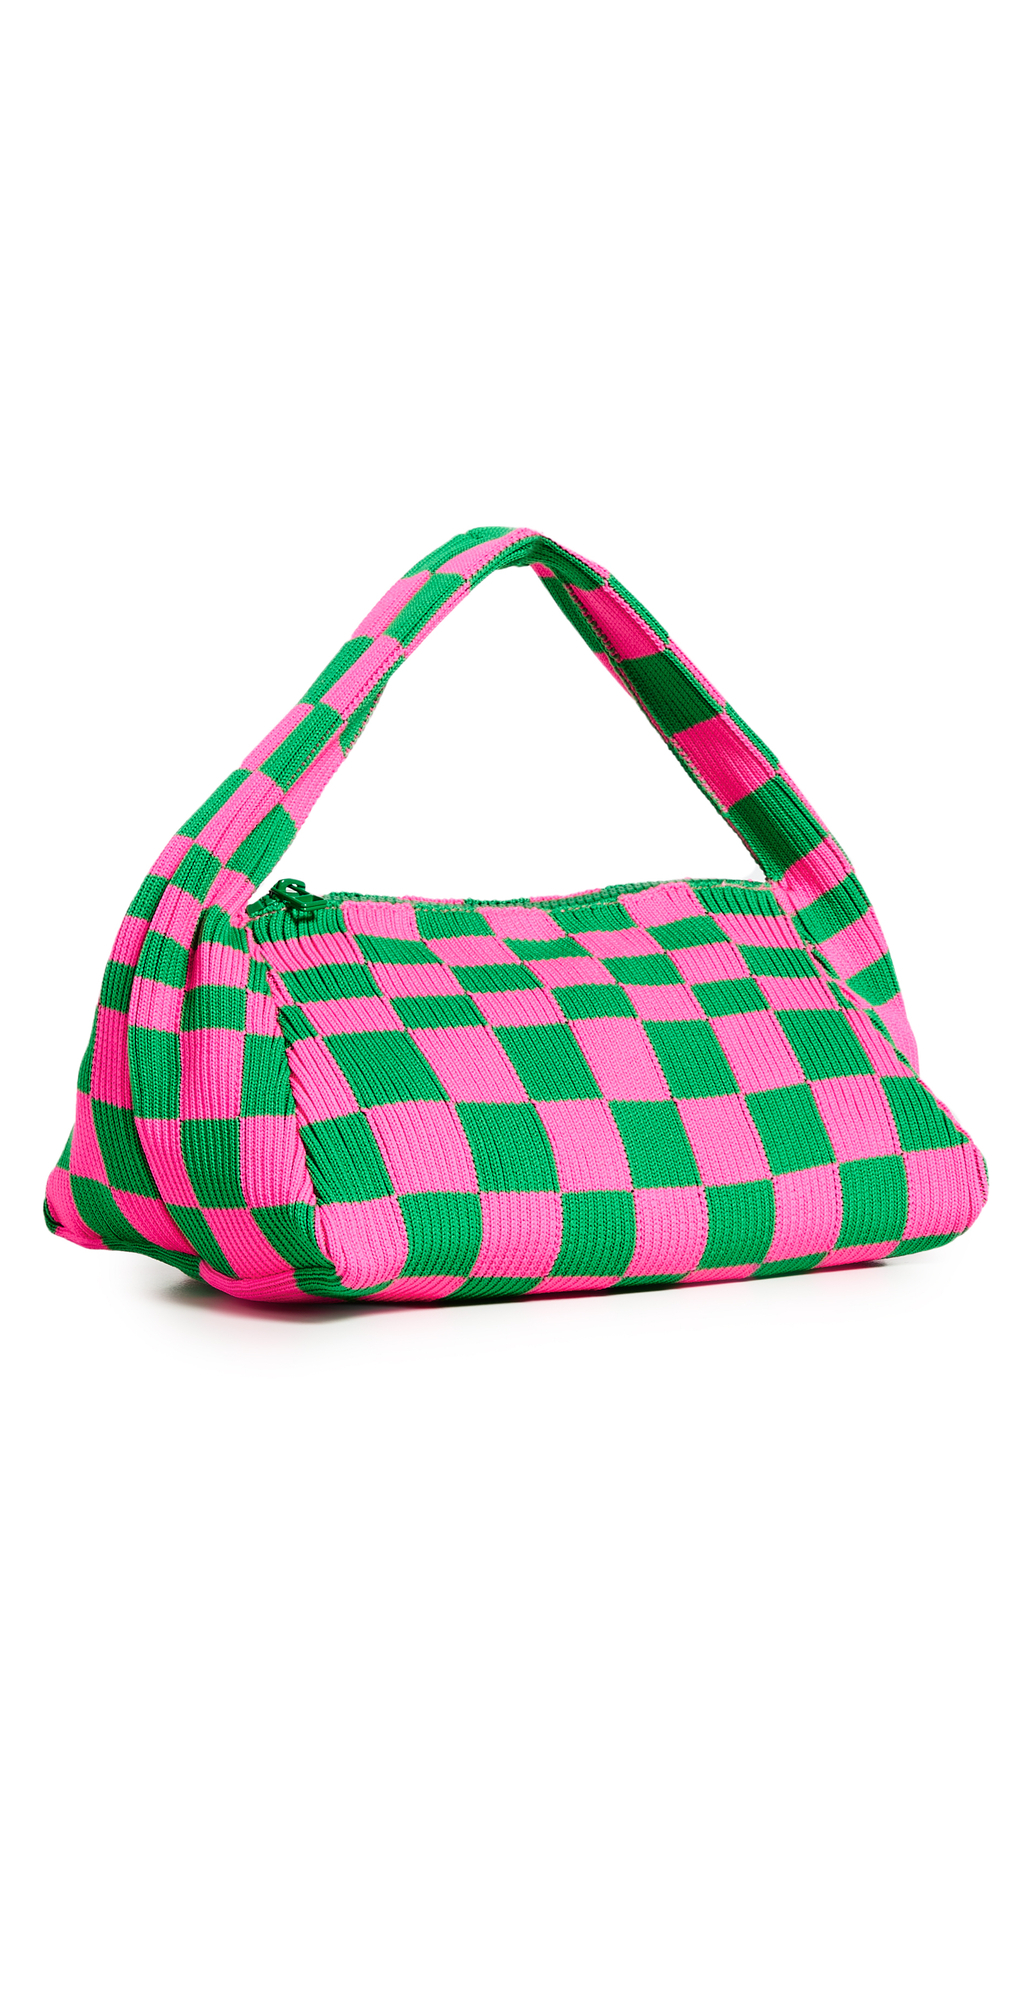 LASTFRAME Ichimatsu Wrap Bag in green / pink